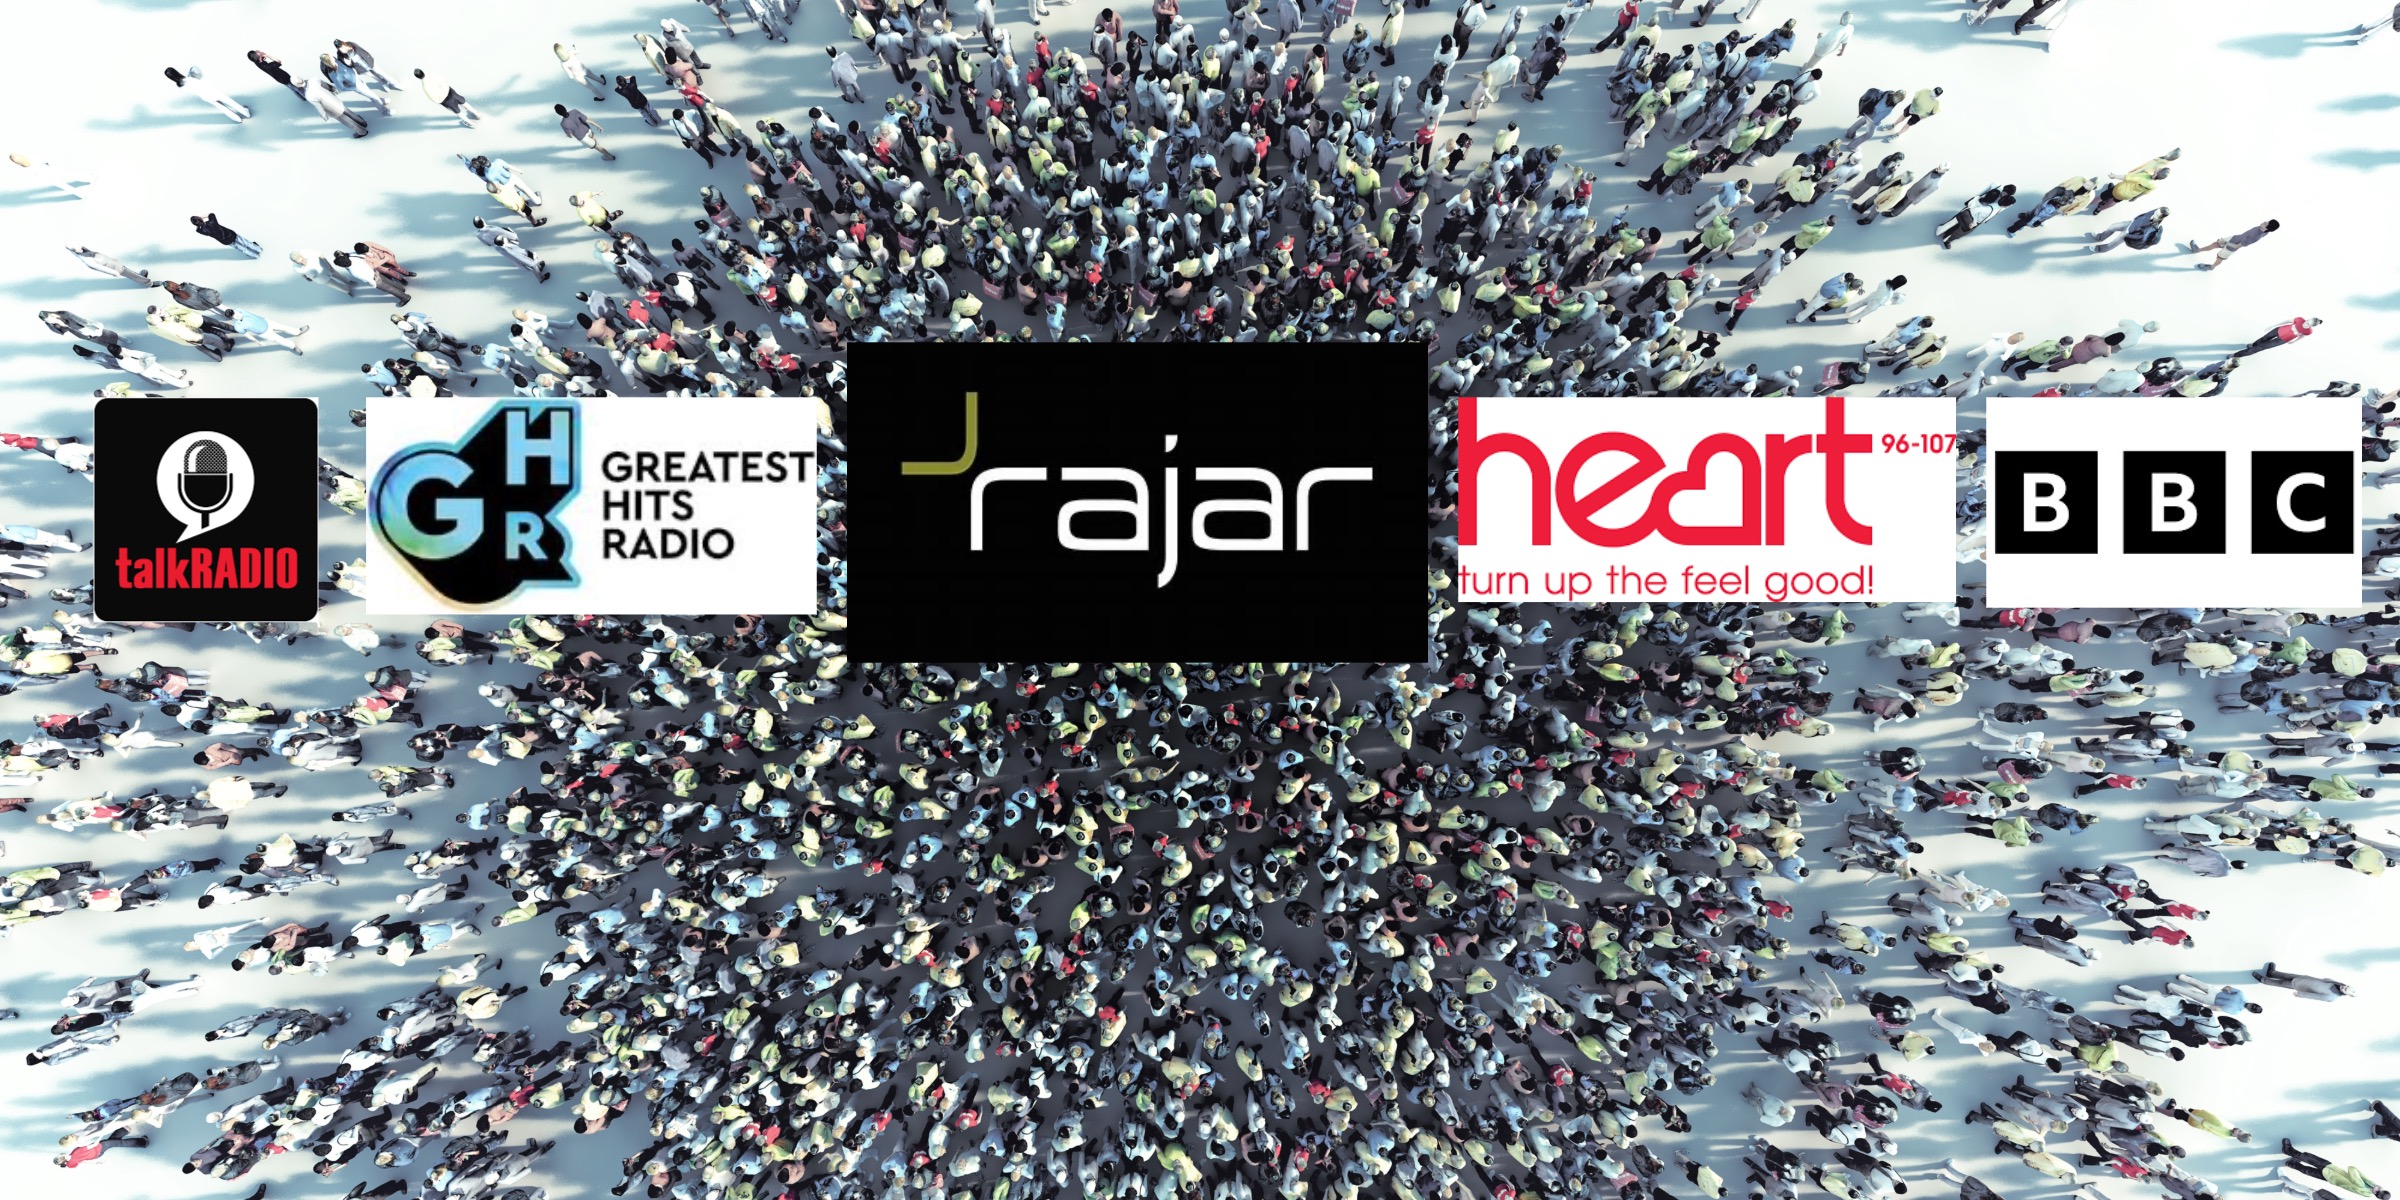 Crowds of people and RAJAR logo